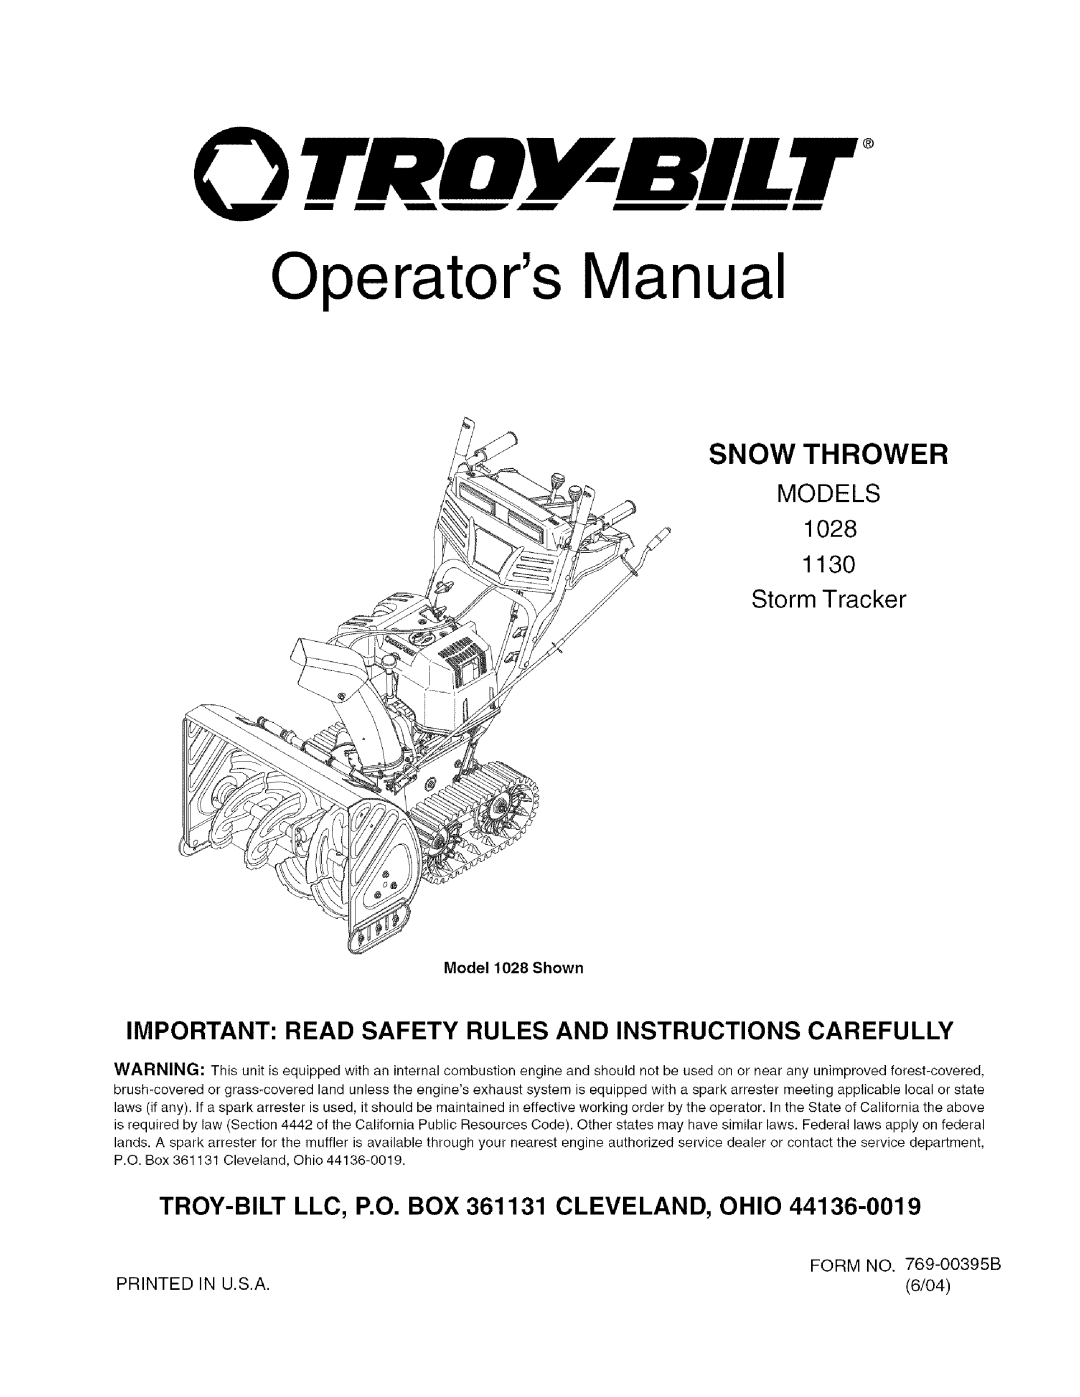 Toro manual Snow Thrower, Operators Manual, MODELS 1028 1130 Storm Tracker 